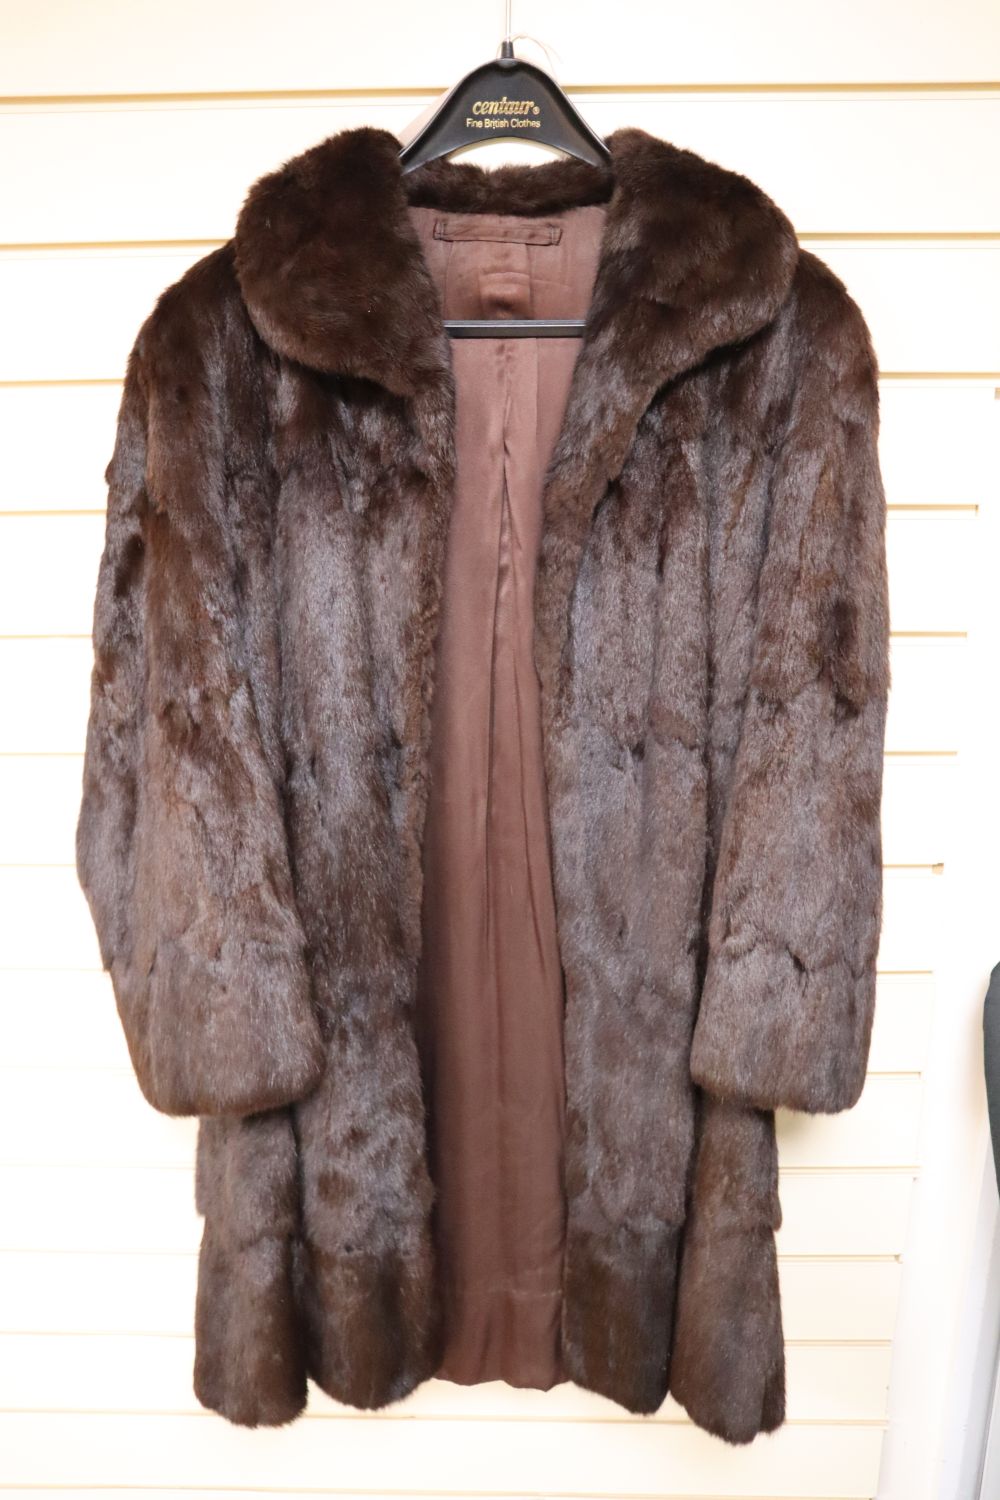 A brown squirrel coat